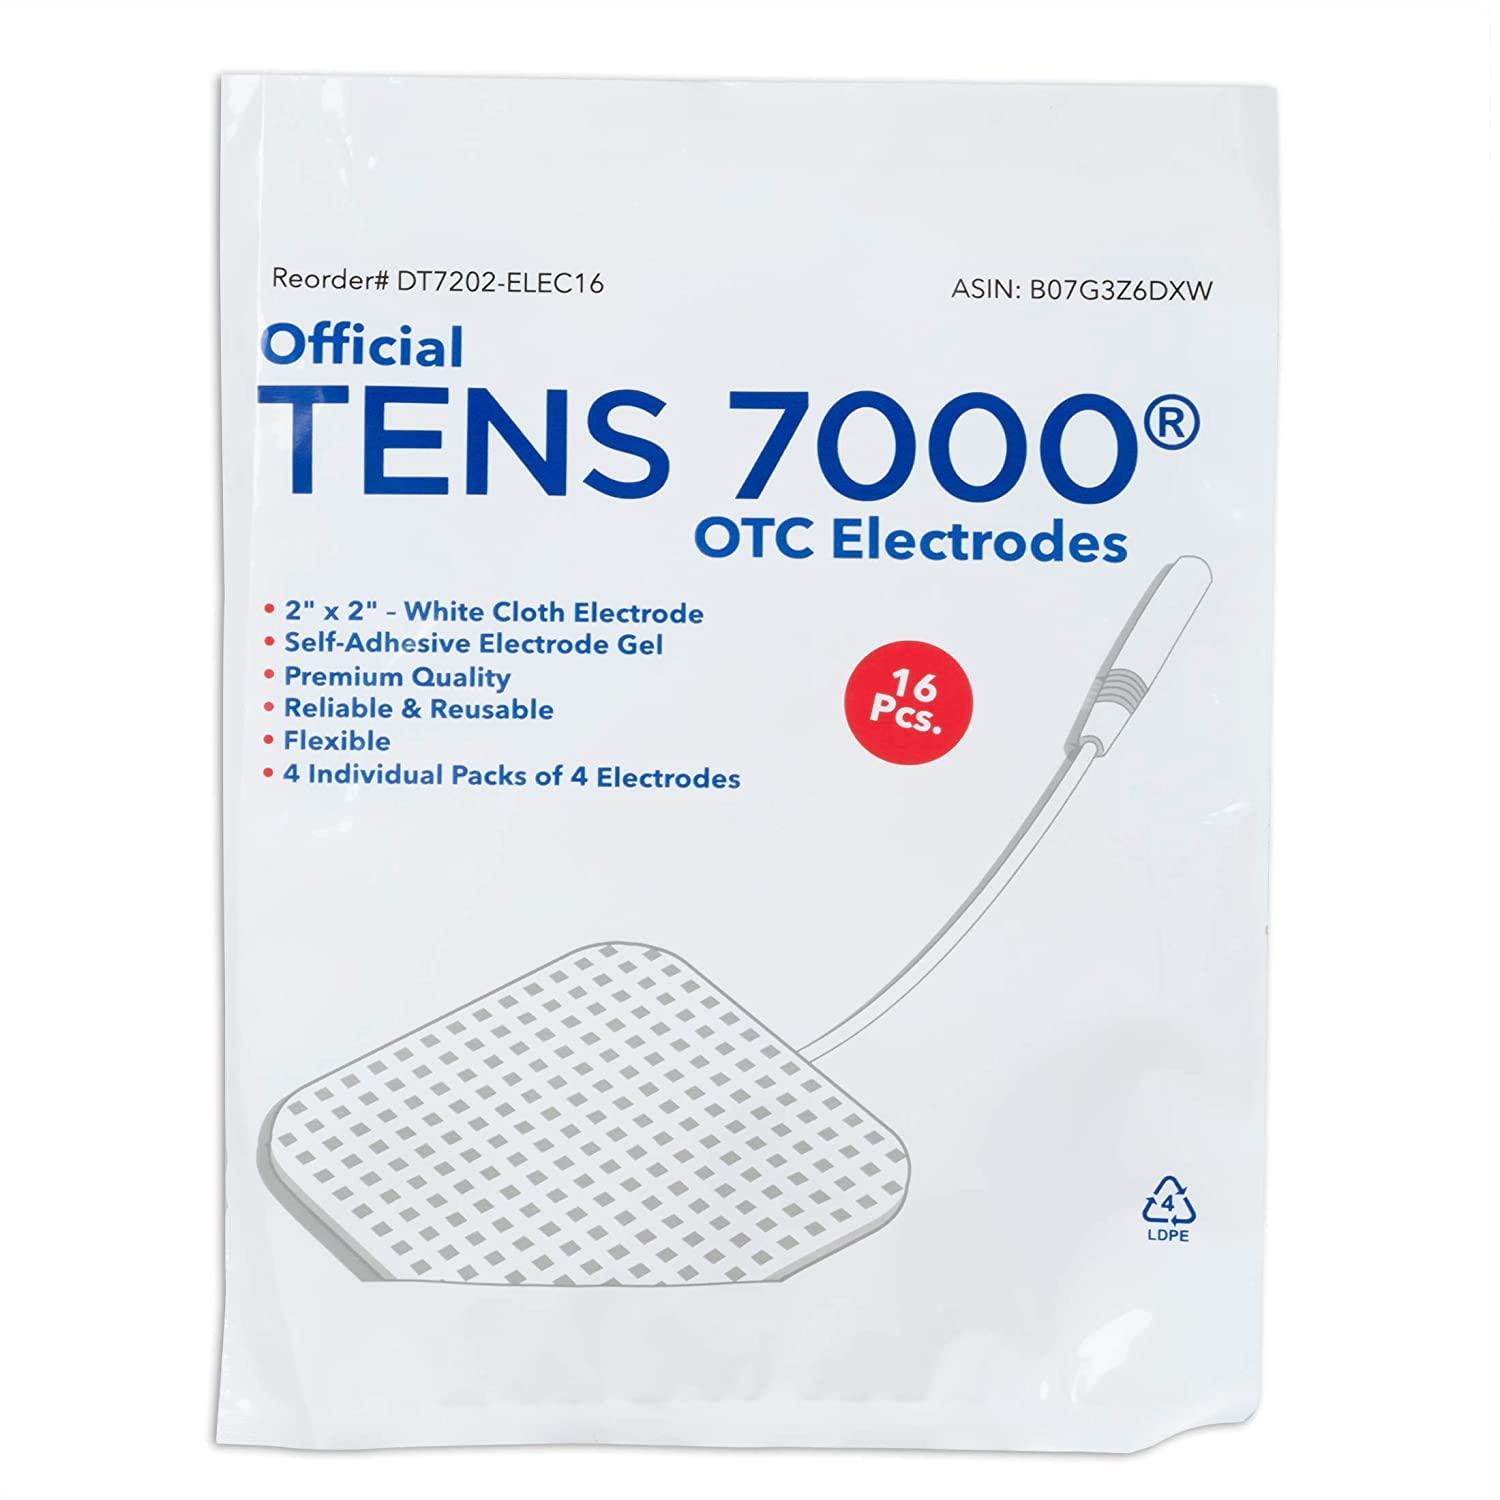 TENS 7000 Official TENS Unit Replacement Pads, 16 Count - Premium